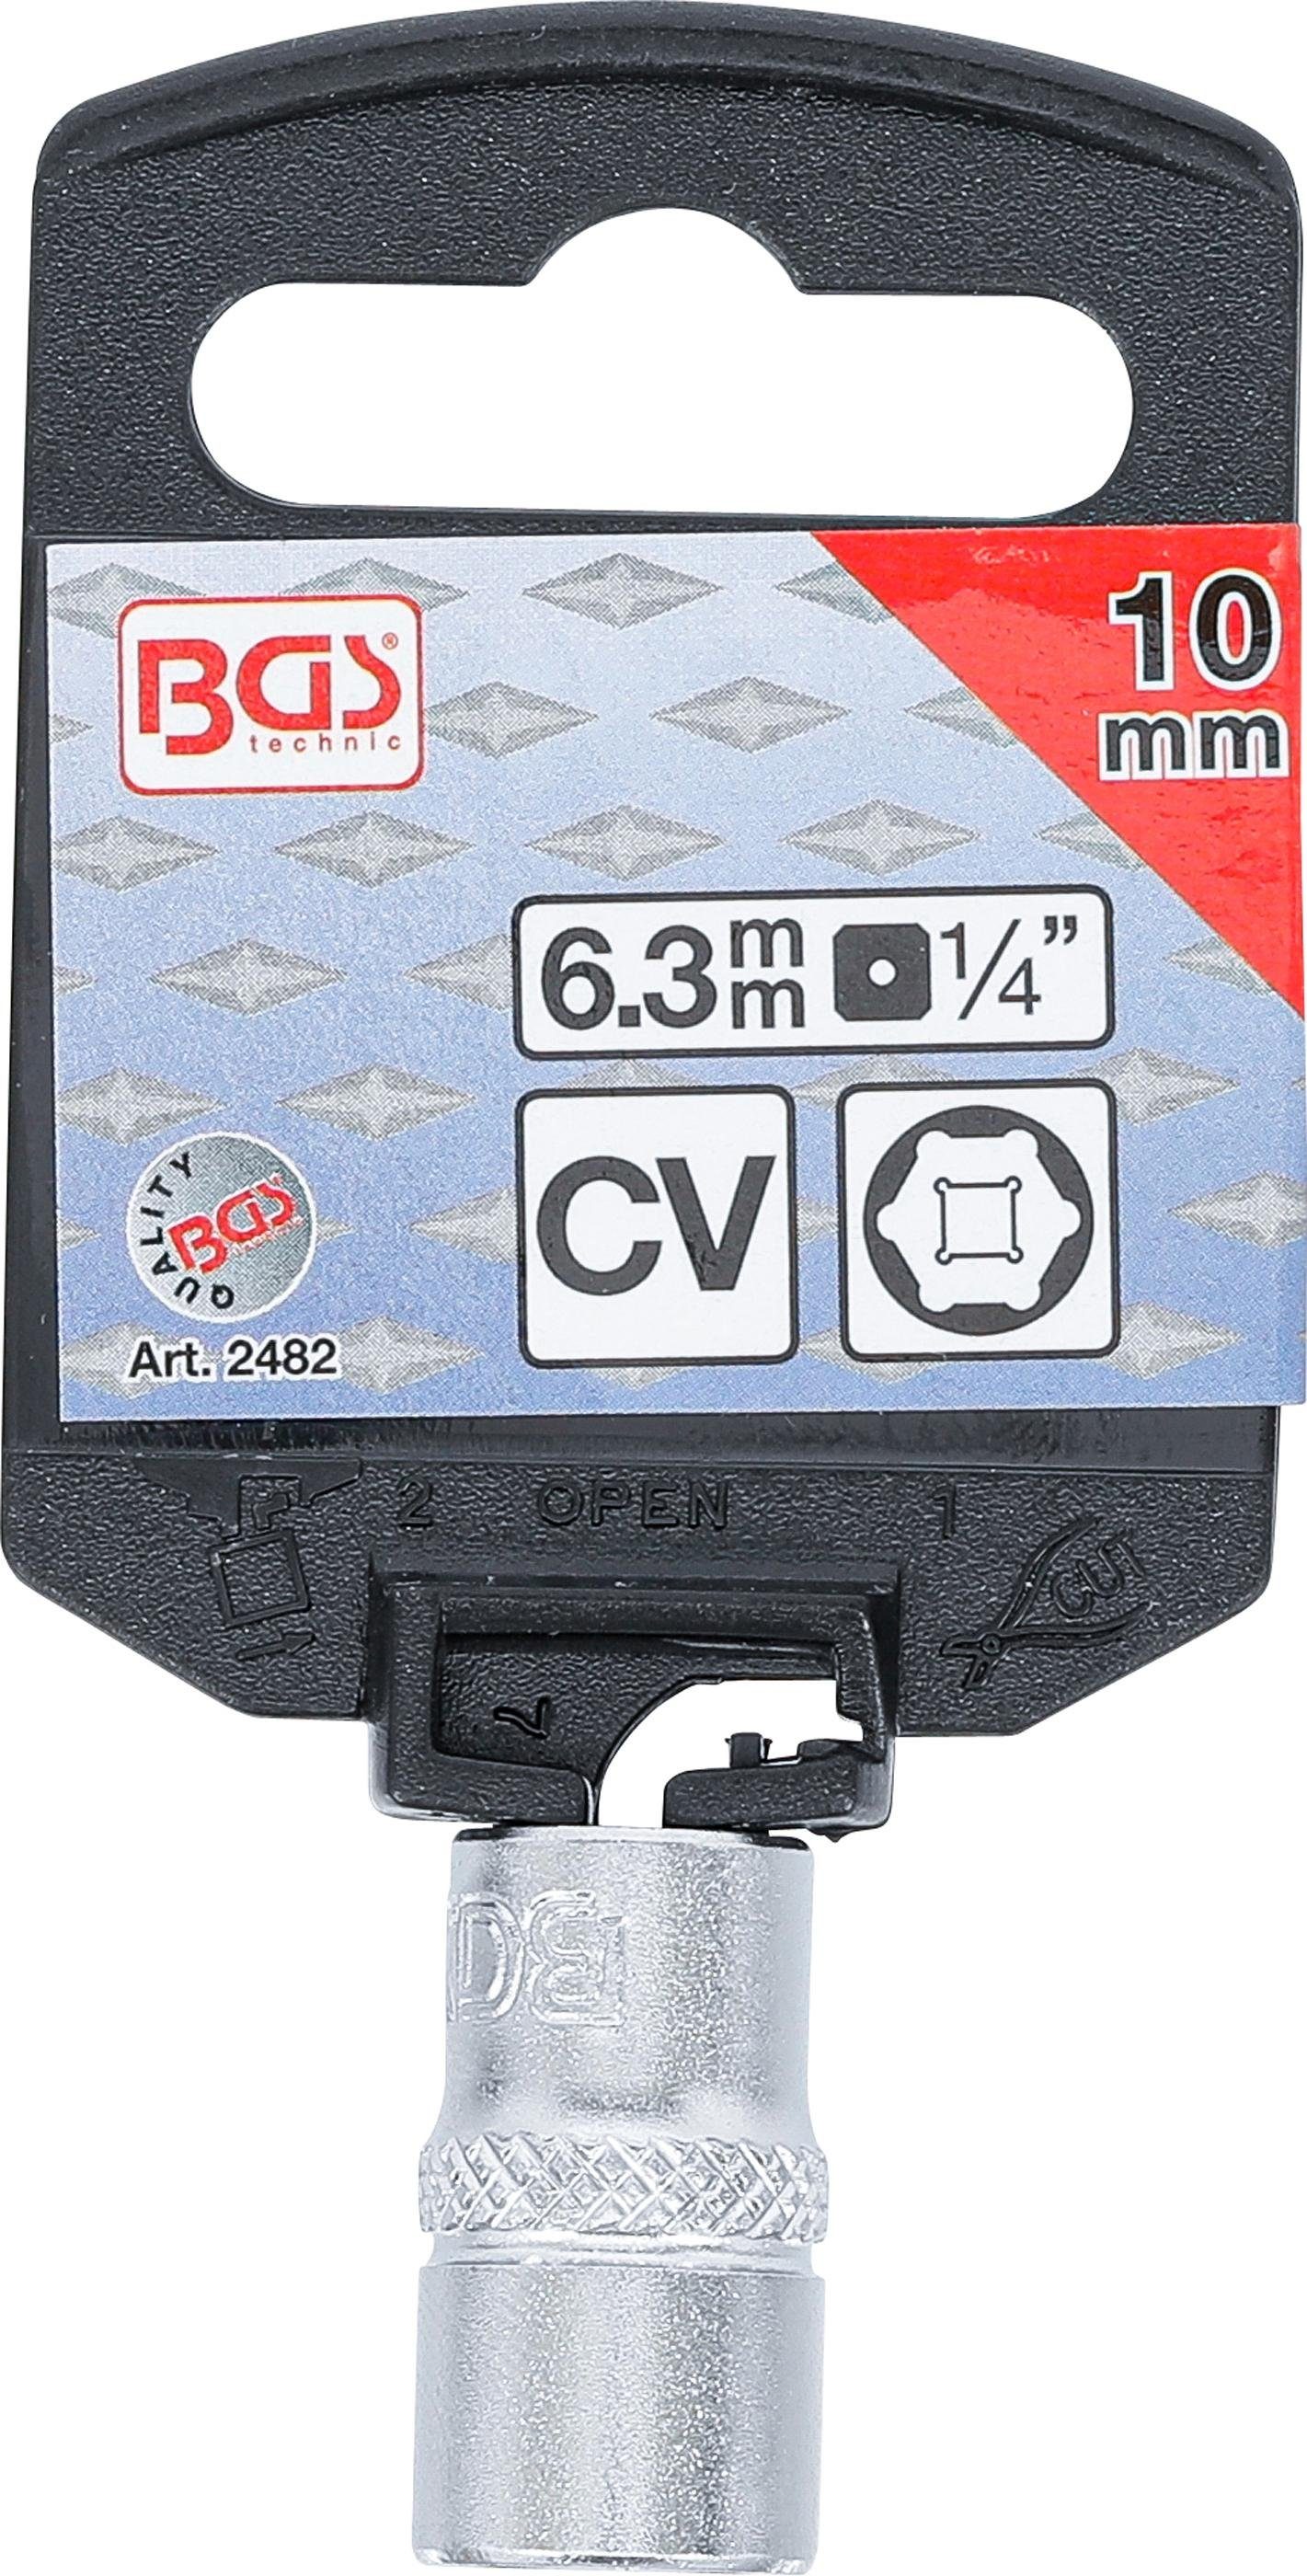 BGS Steckschlüssel-Einsatz 6,3 mm technic 10 Innenvierkant mm Steckschlüssel Sechskant, Antrieb SW (1/4),